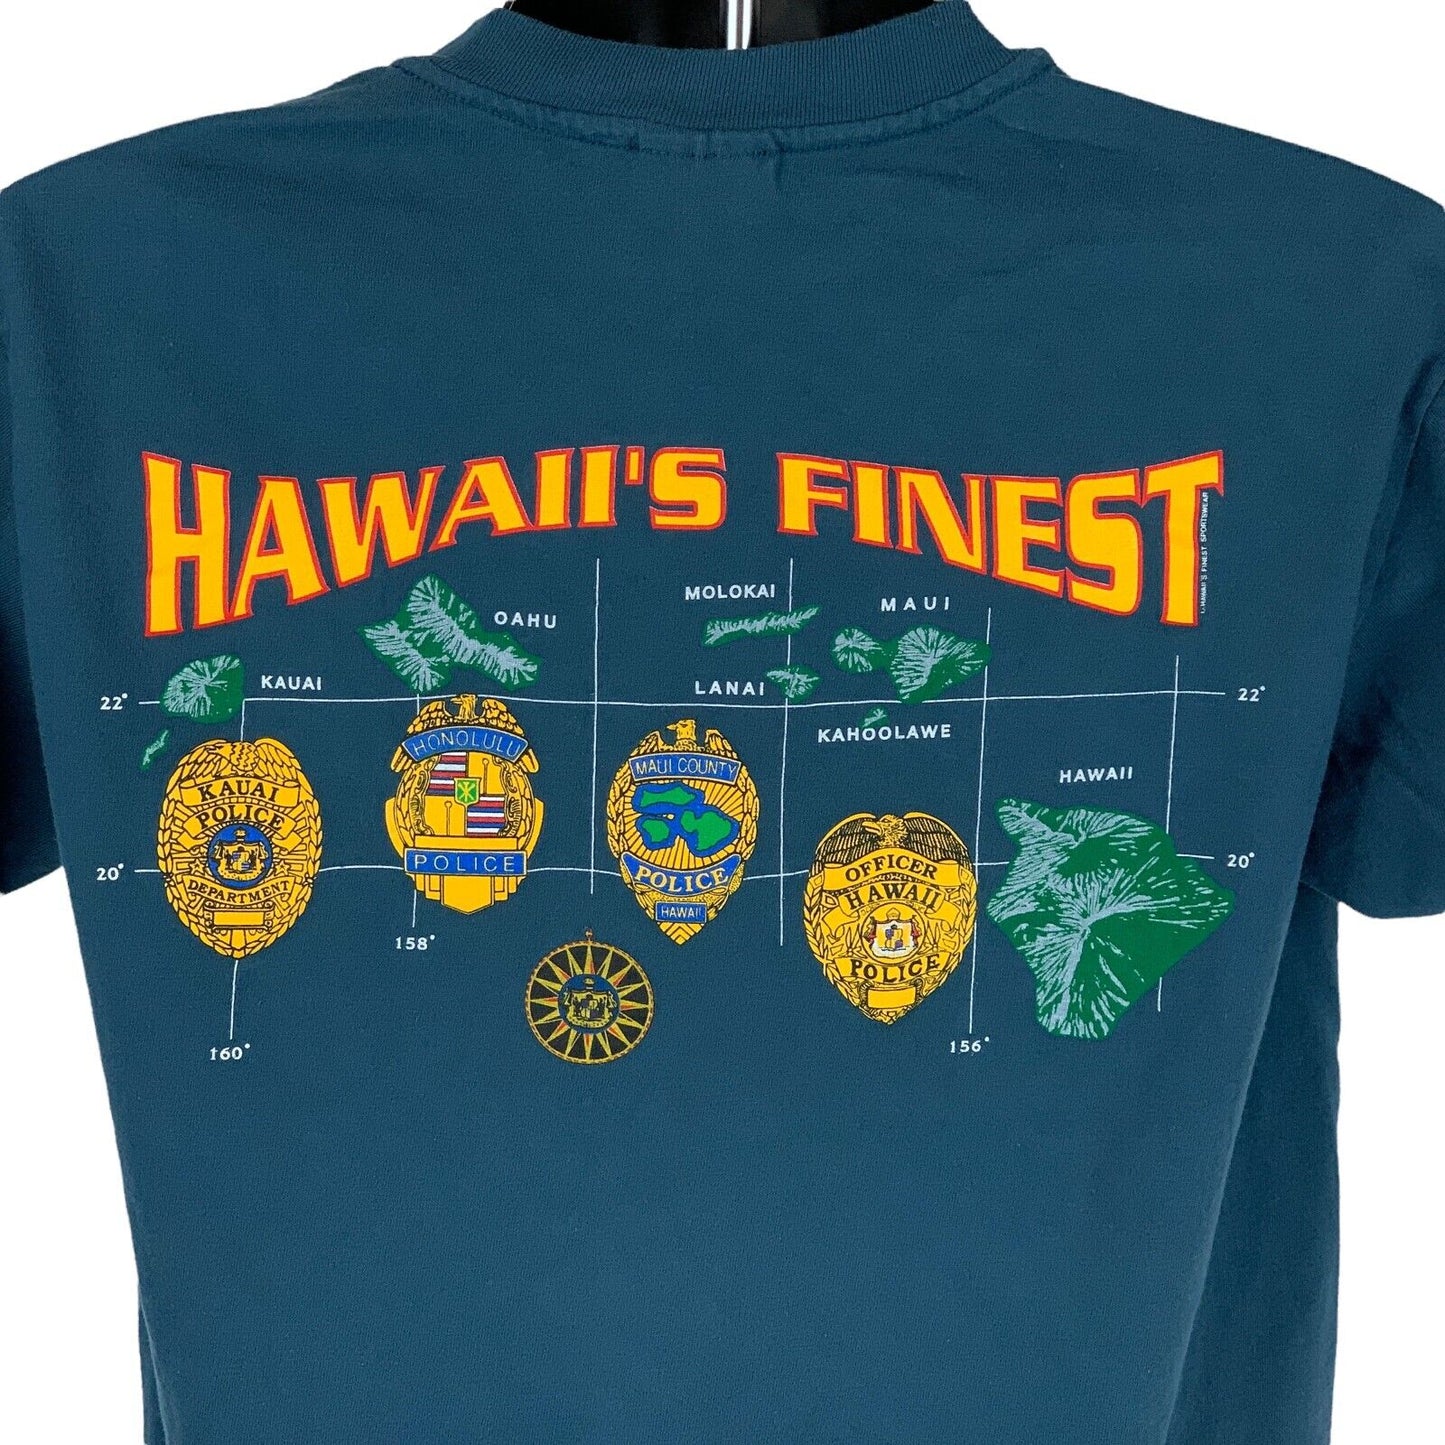 Vintage 90s Hawaii's Finest Police T Shirt Five-0 Cops Officers Badges Medium